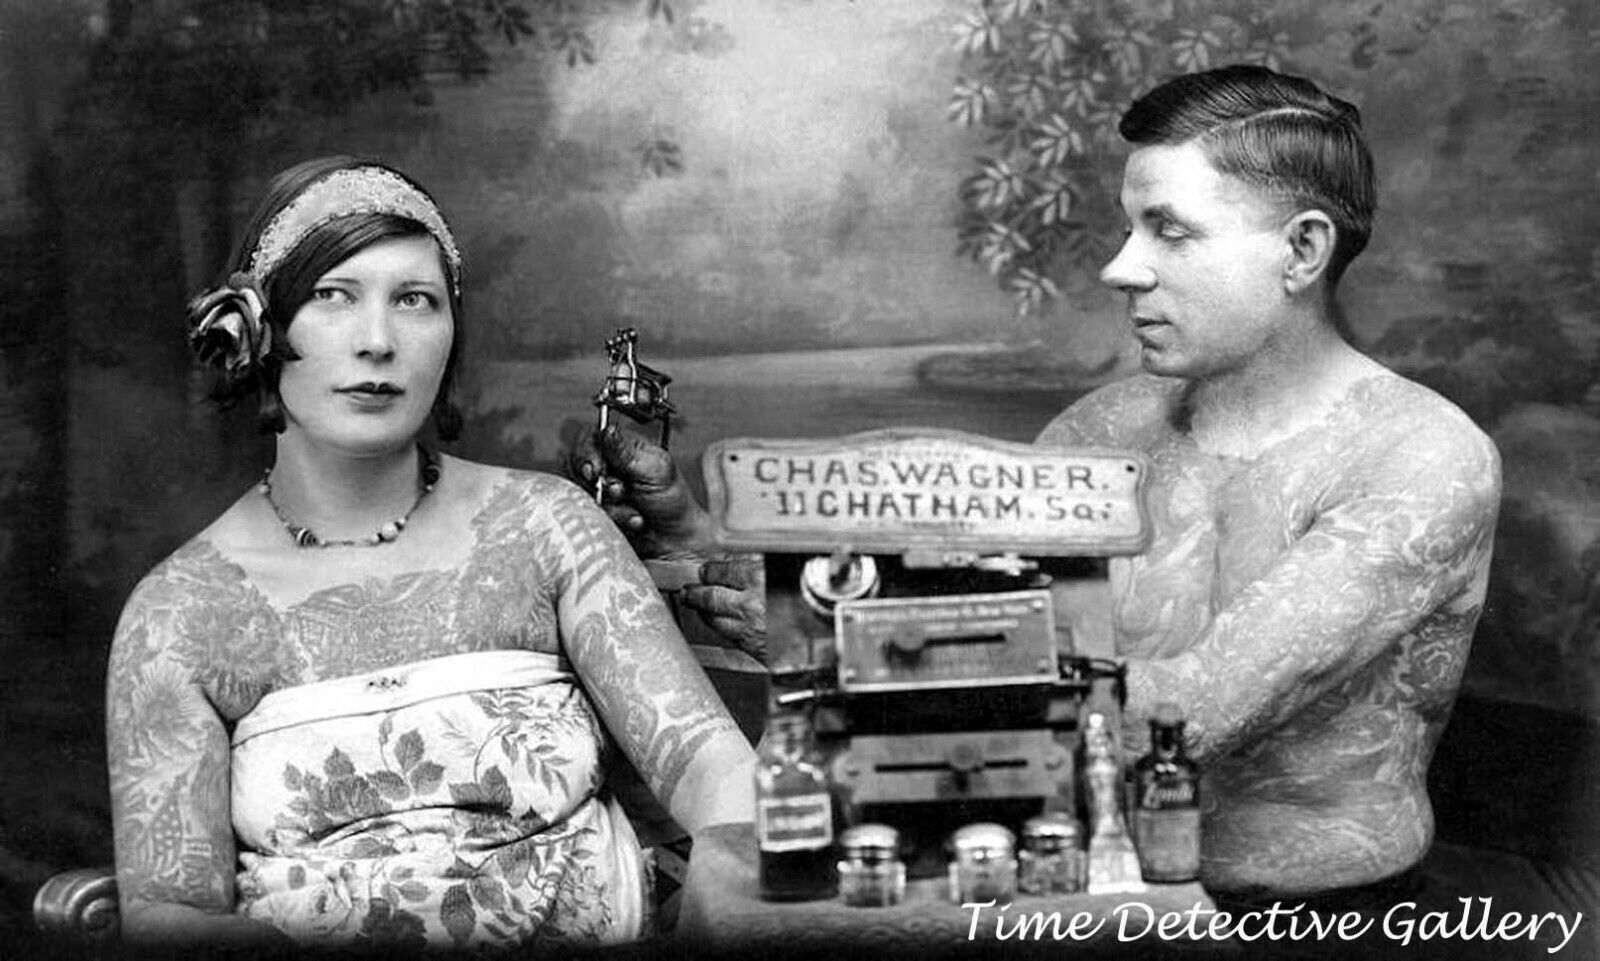 Woman Getting a Tattoo - 1920s - Vintage Photo Print